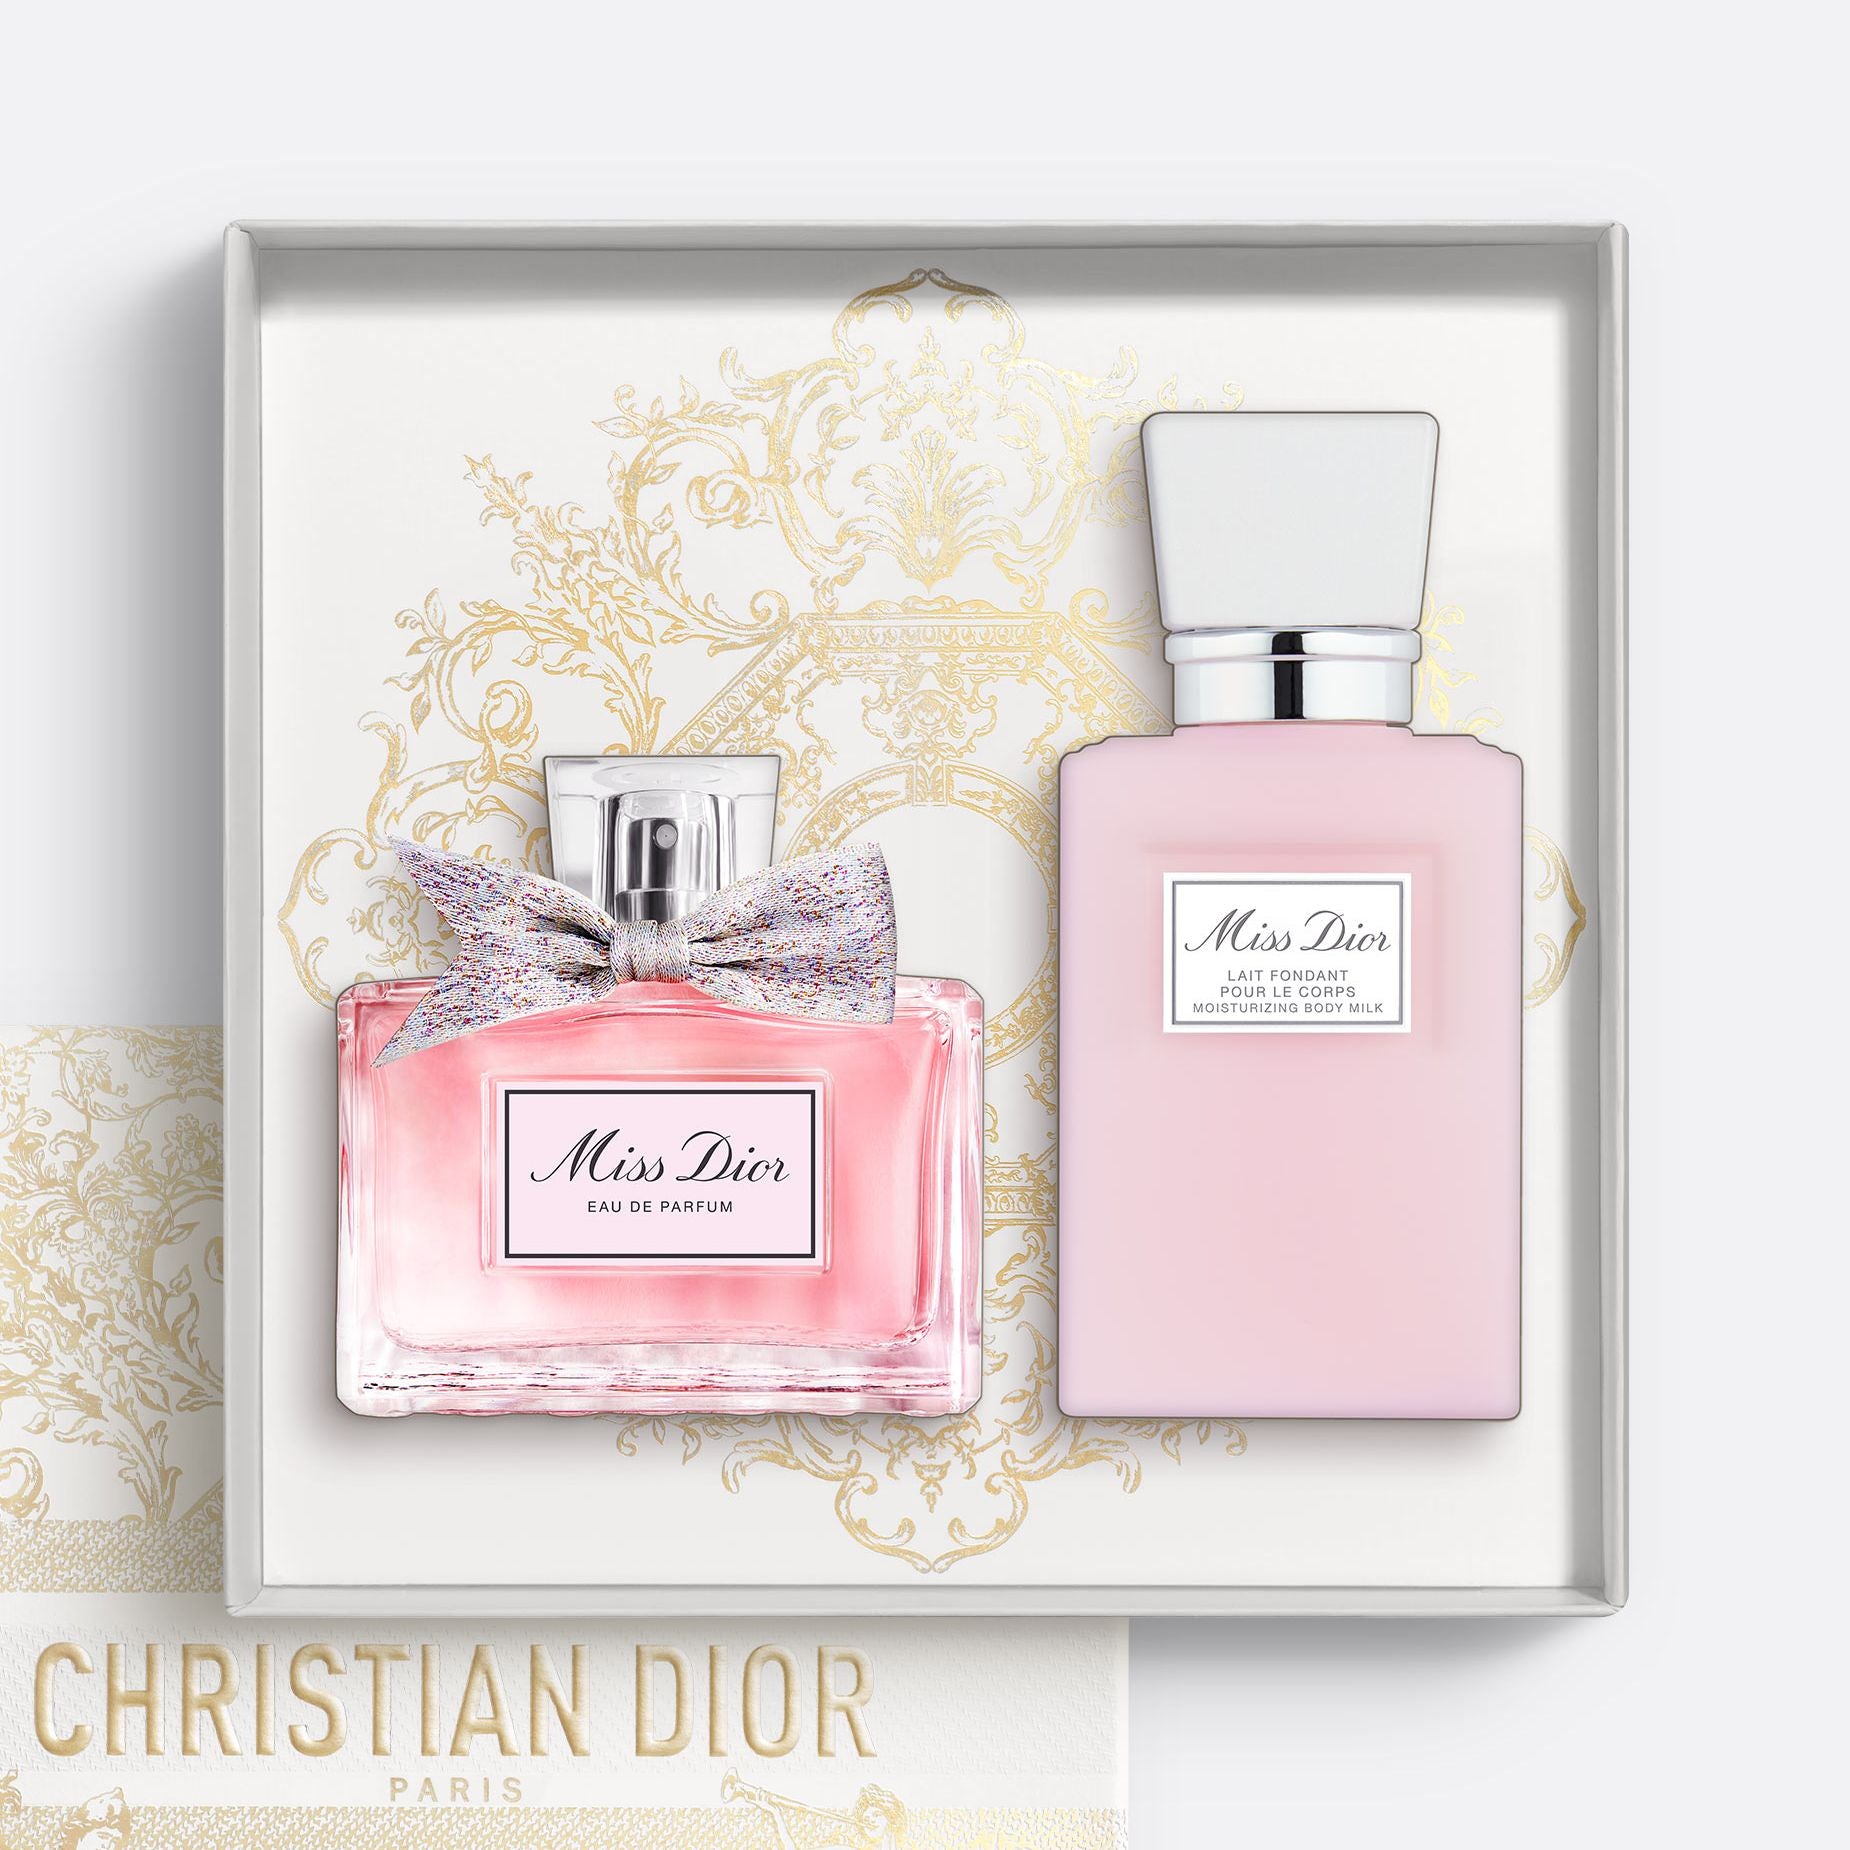 MISS DIOR - THE PERFUMING RITUAL - LIMITED EDITION ~ Miss Dior Set - Eau de Parfum and Body Milk